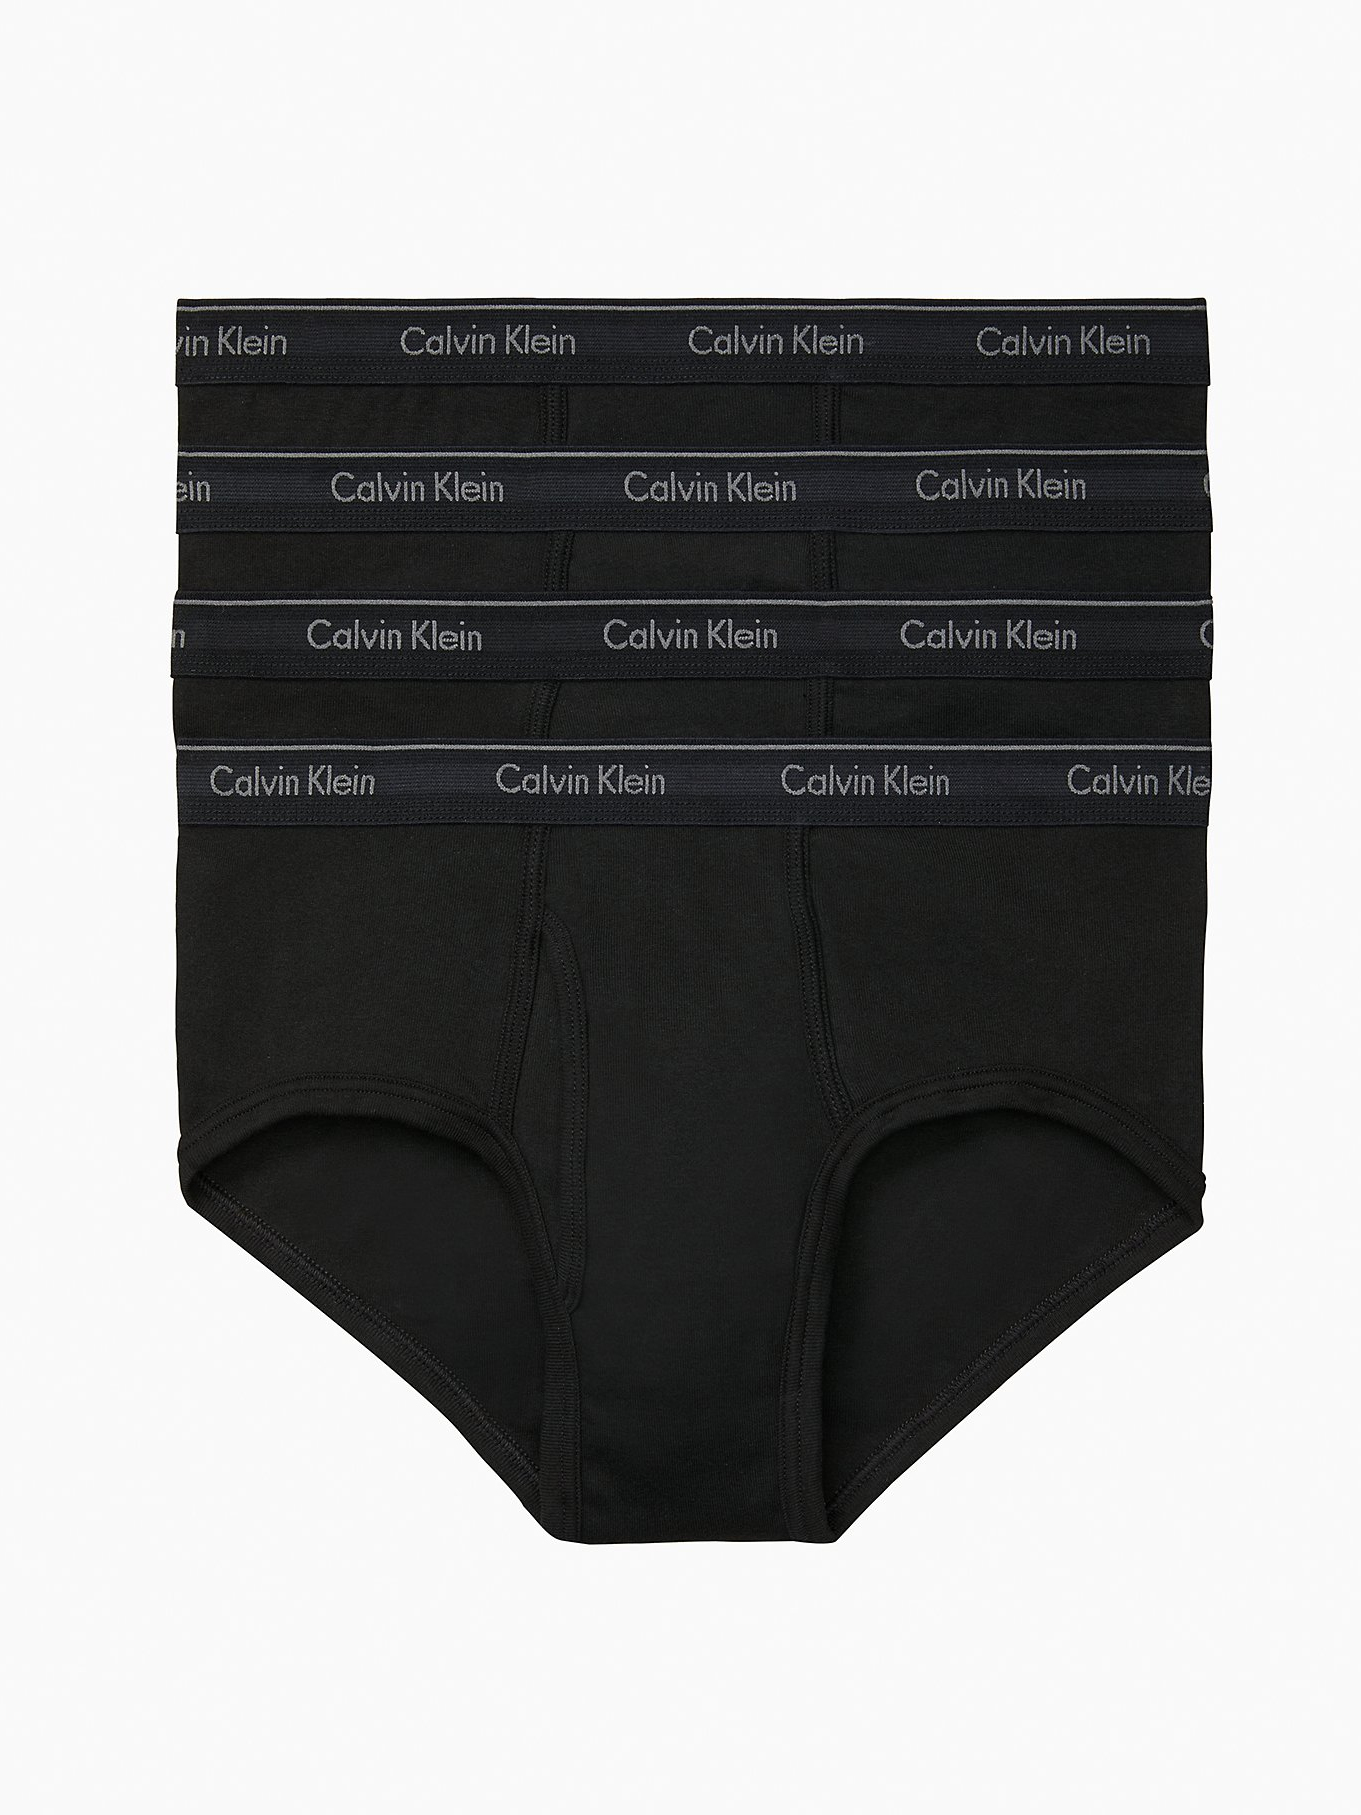 Calvin Klein Cotton Classics Briefs 4-Pack Black Multi NB4000-932 - Free  Shipping at LASC